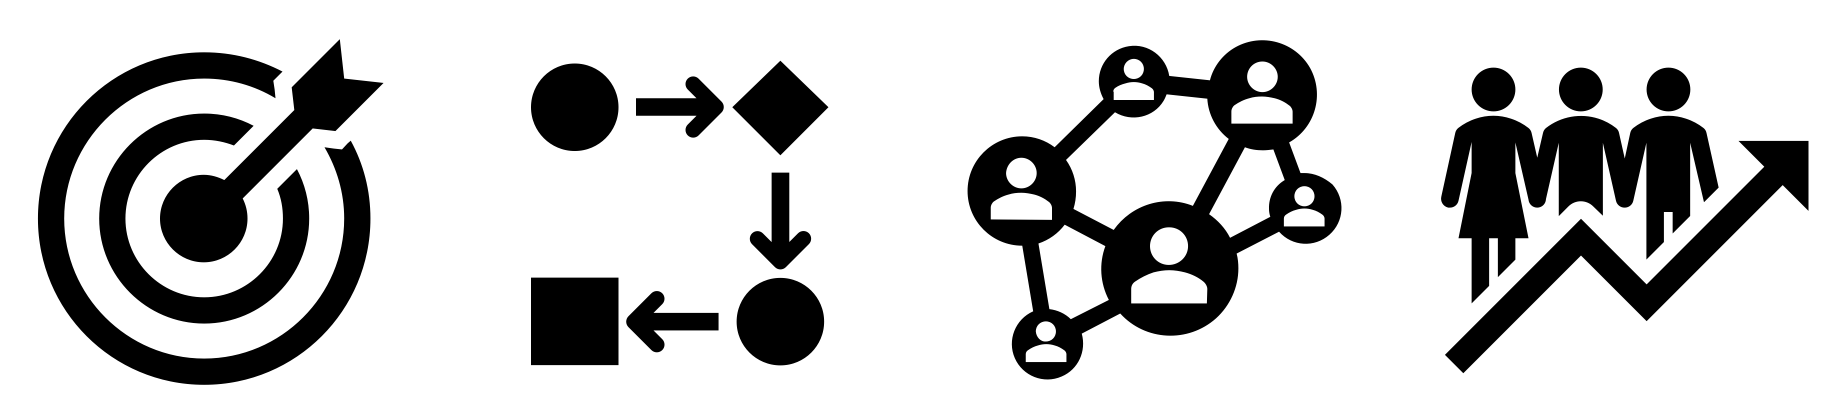 bi logo lms